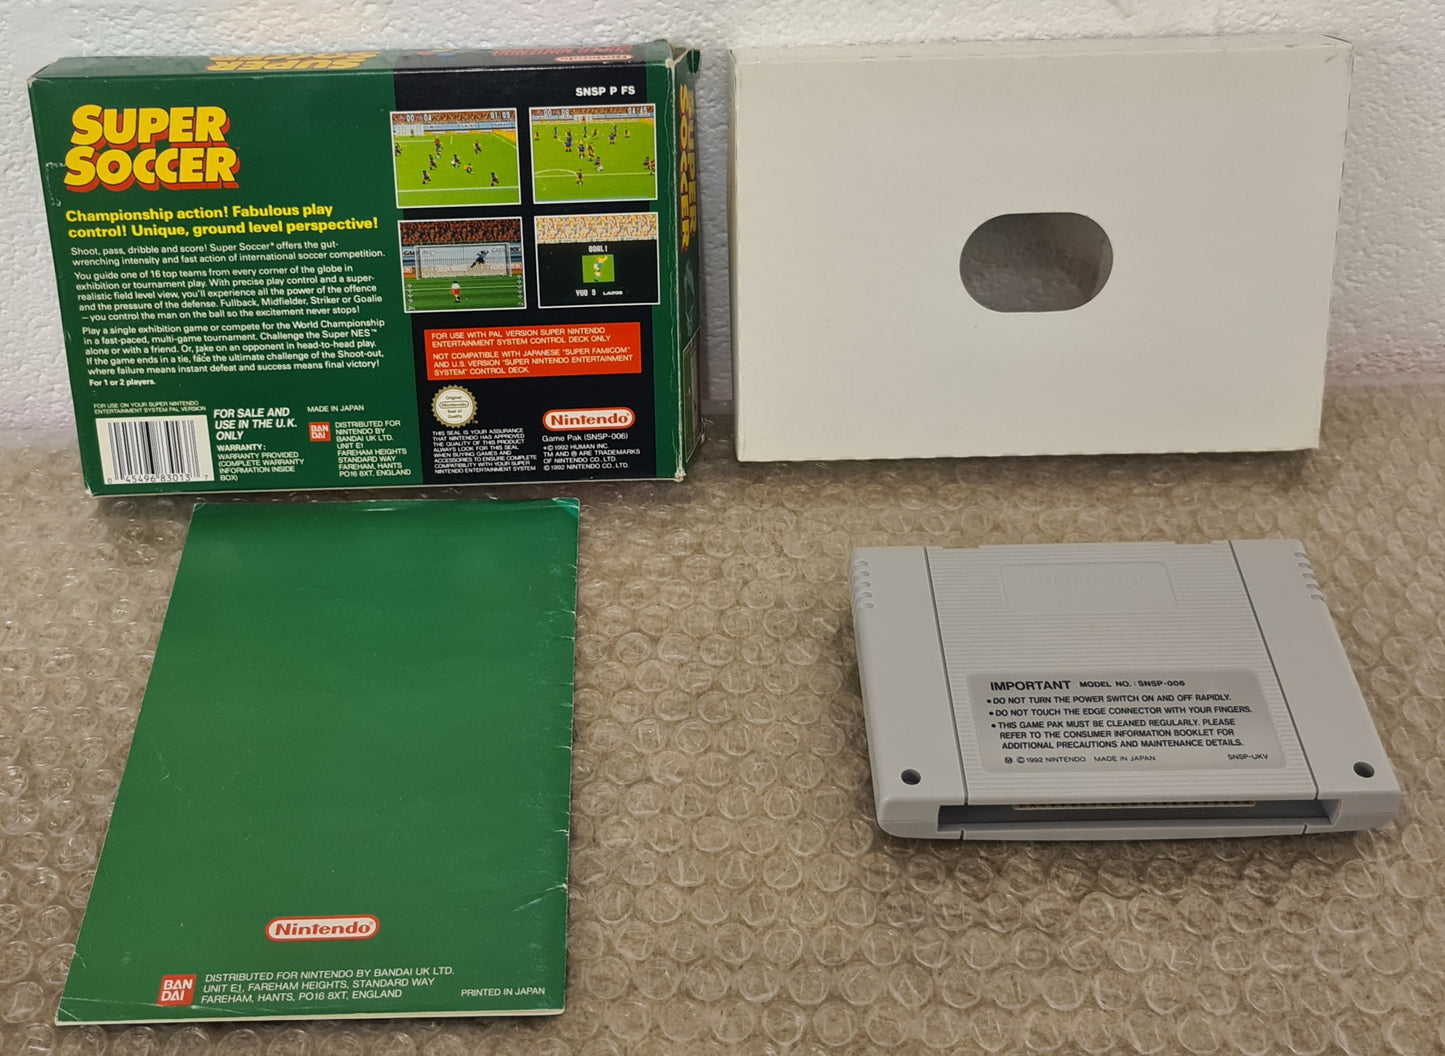 Super Soccer Super Nintendo Entertainment System (SNES) Game